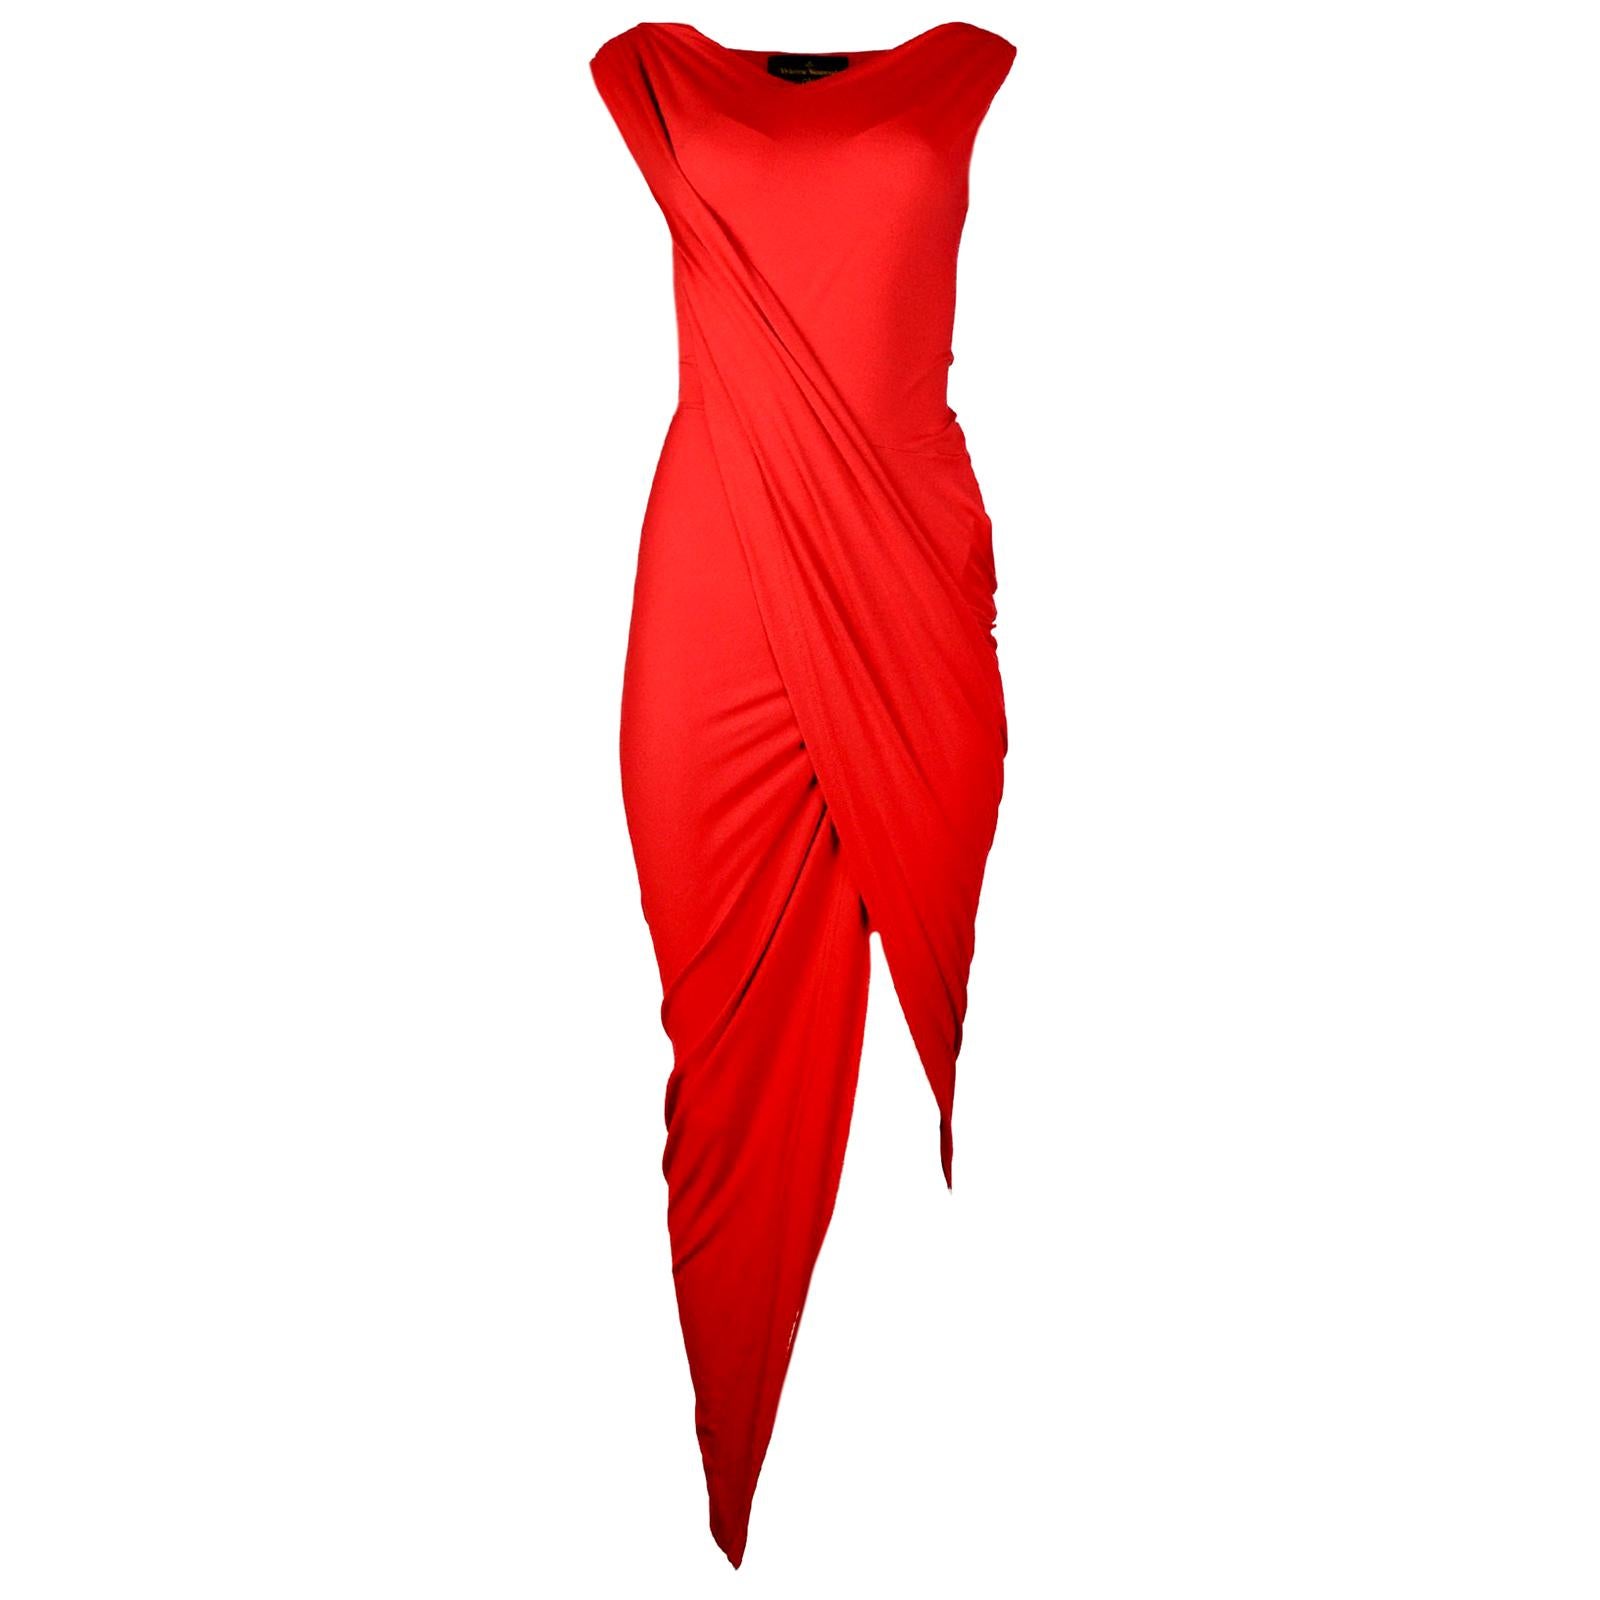 Vivienne Westwood Maxi Dress - 3 For Sale on 1stDibs